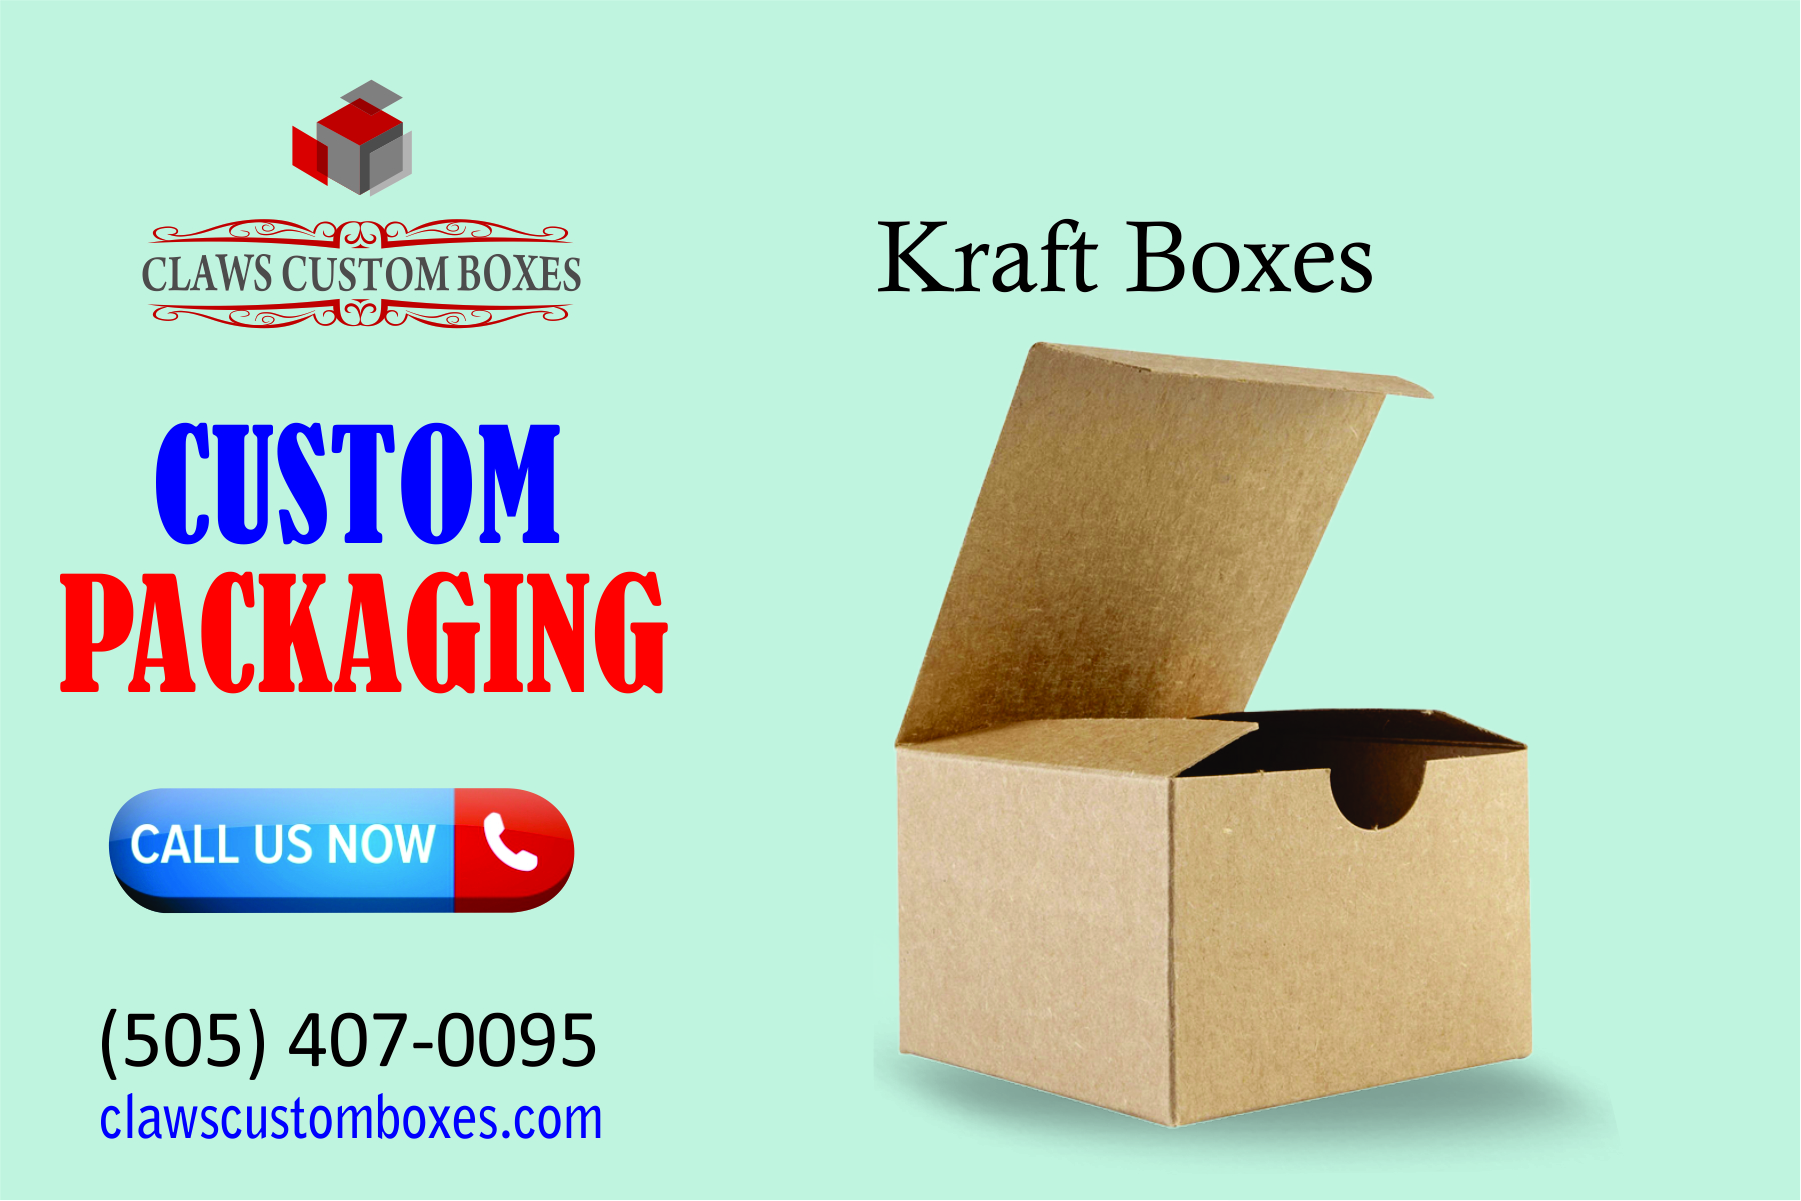 Kraft Boxes| Custom Boxes| Claws Custom Boxes, Farmington, Connecticut, United States